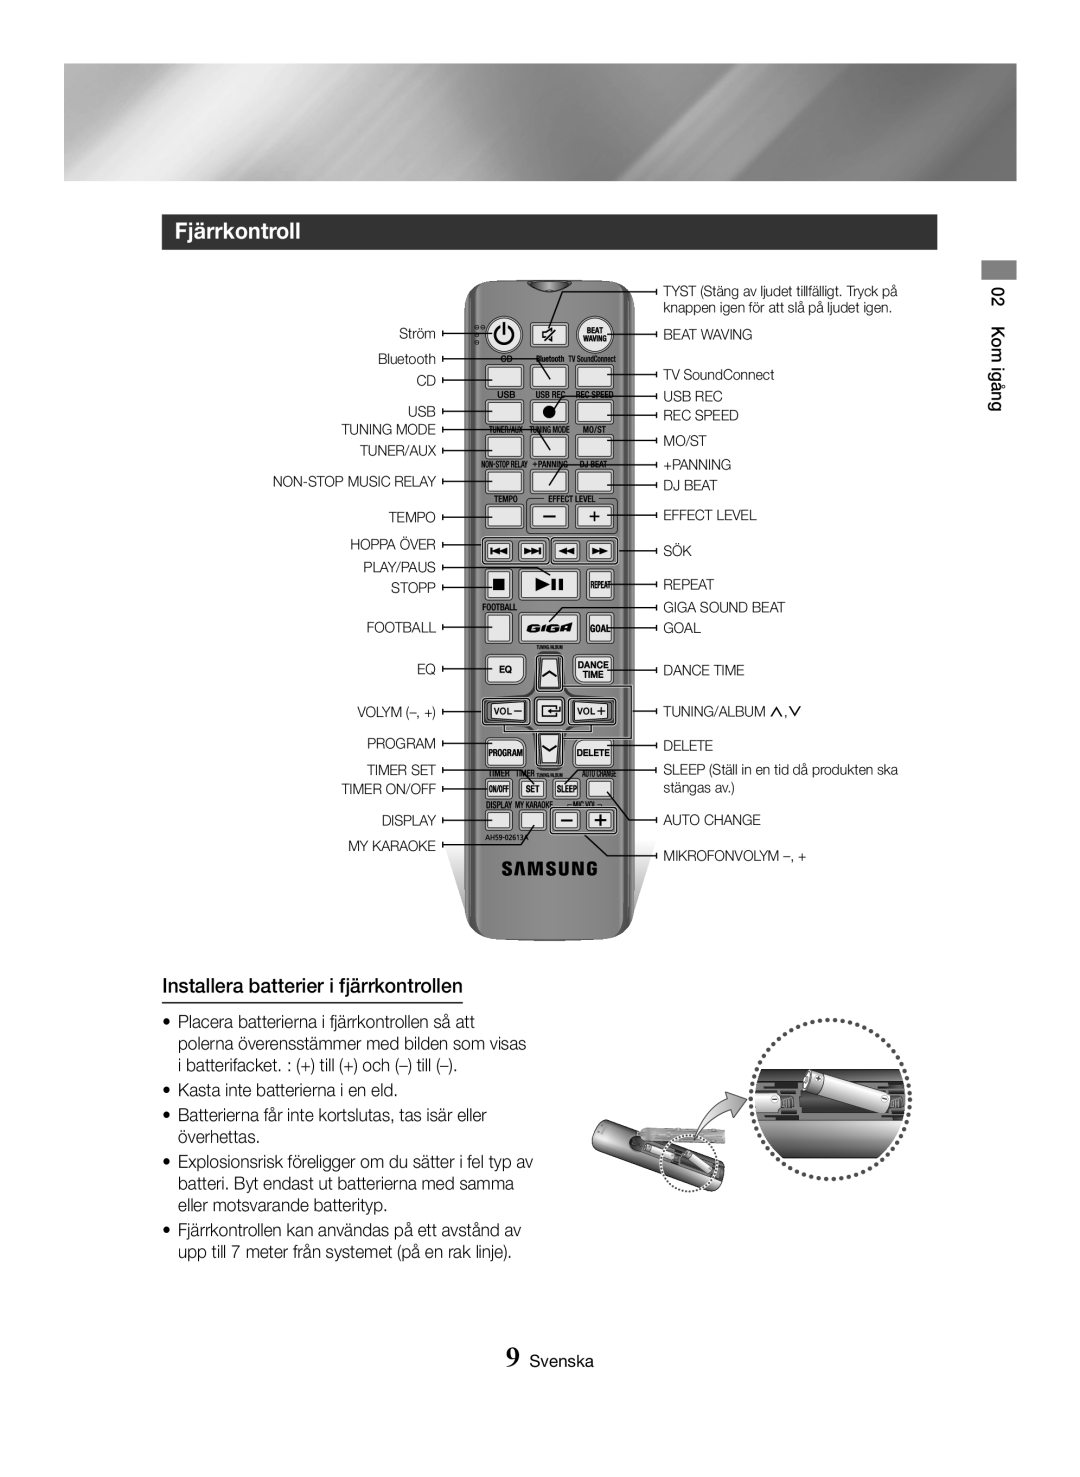 Samsung MX-HS8000/ZF, MX-HS8000/EN manual Fjärrkontroll, Installera batterier i fjärrkontrollen, Kom igång, Svenska 